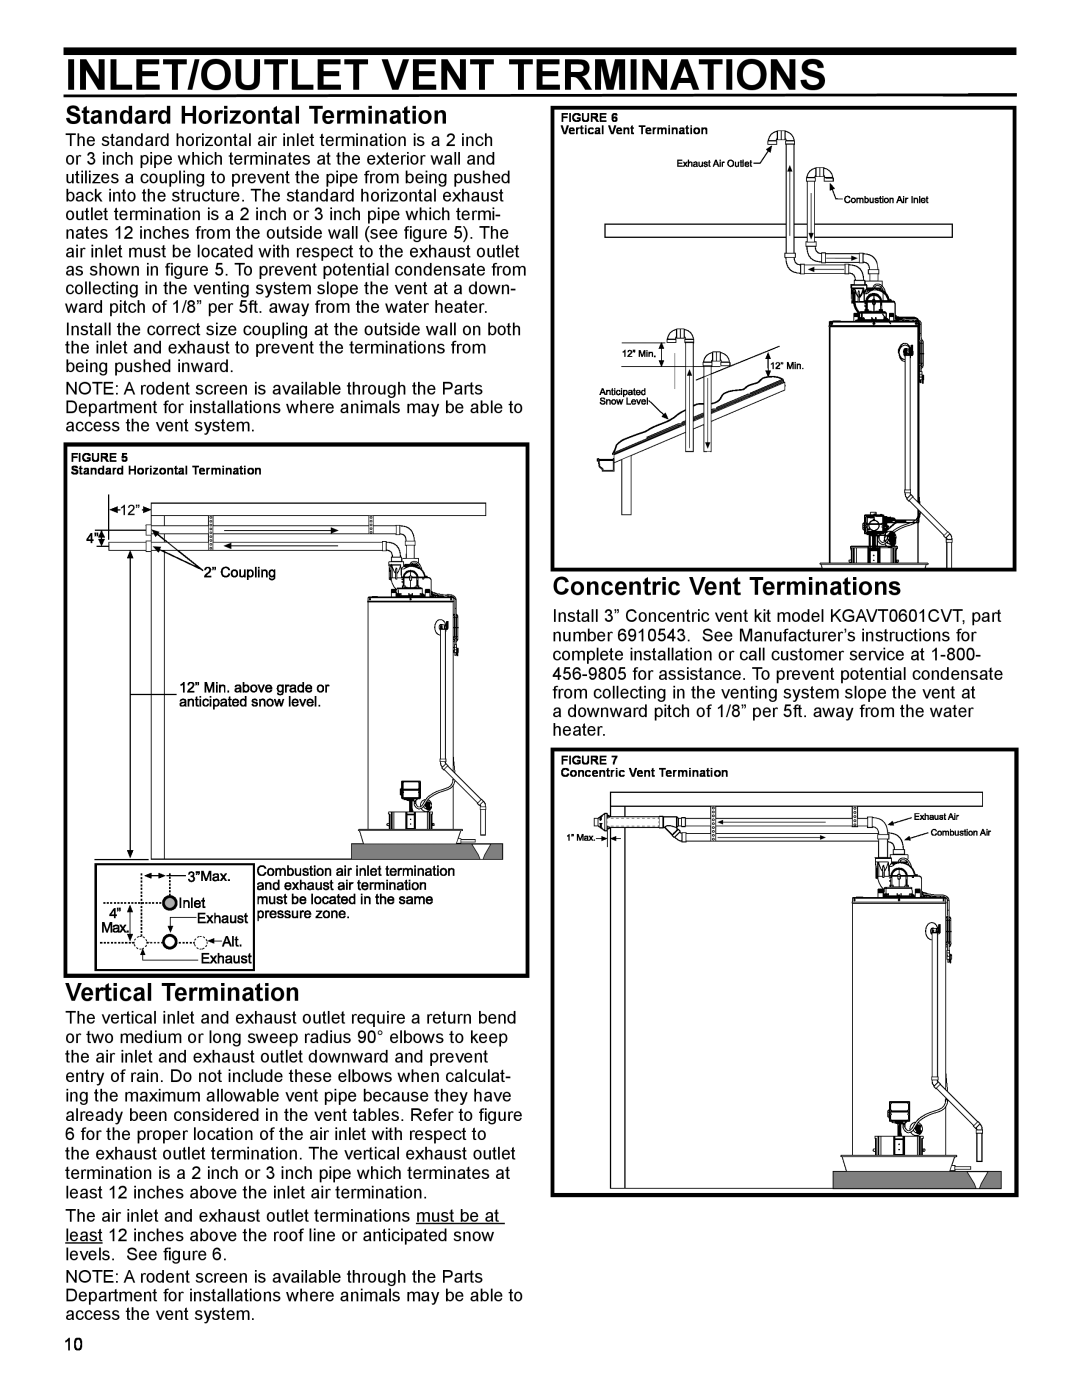 American Water Heater 40-42K BTU Inlet/Outlet Vent Terminations, Standard Horizontal Termination, Vertical Termination 